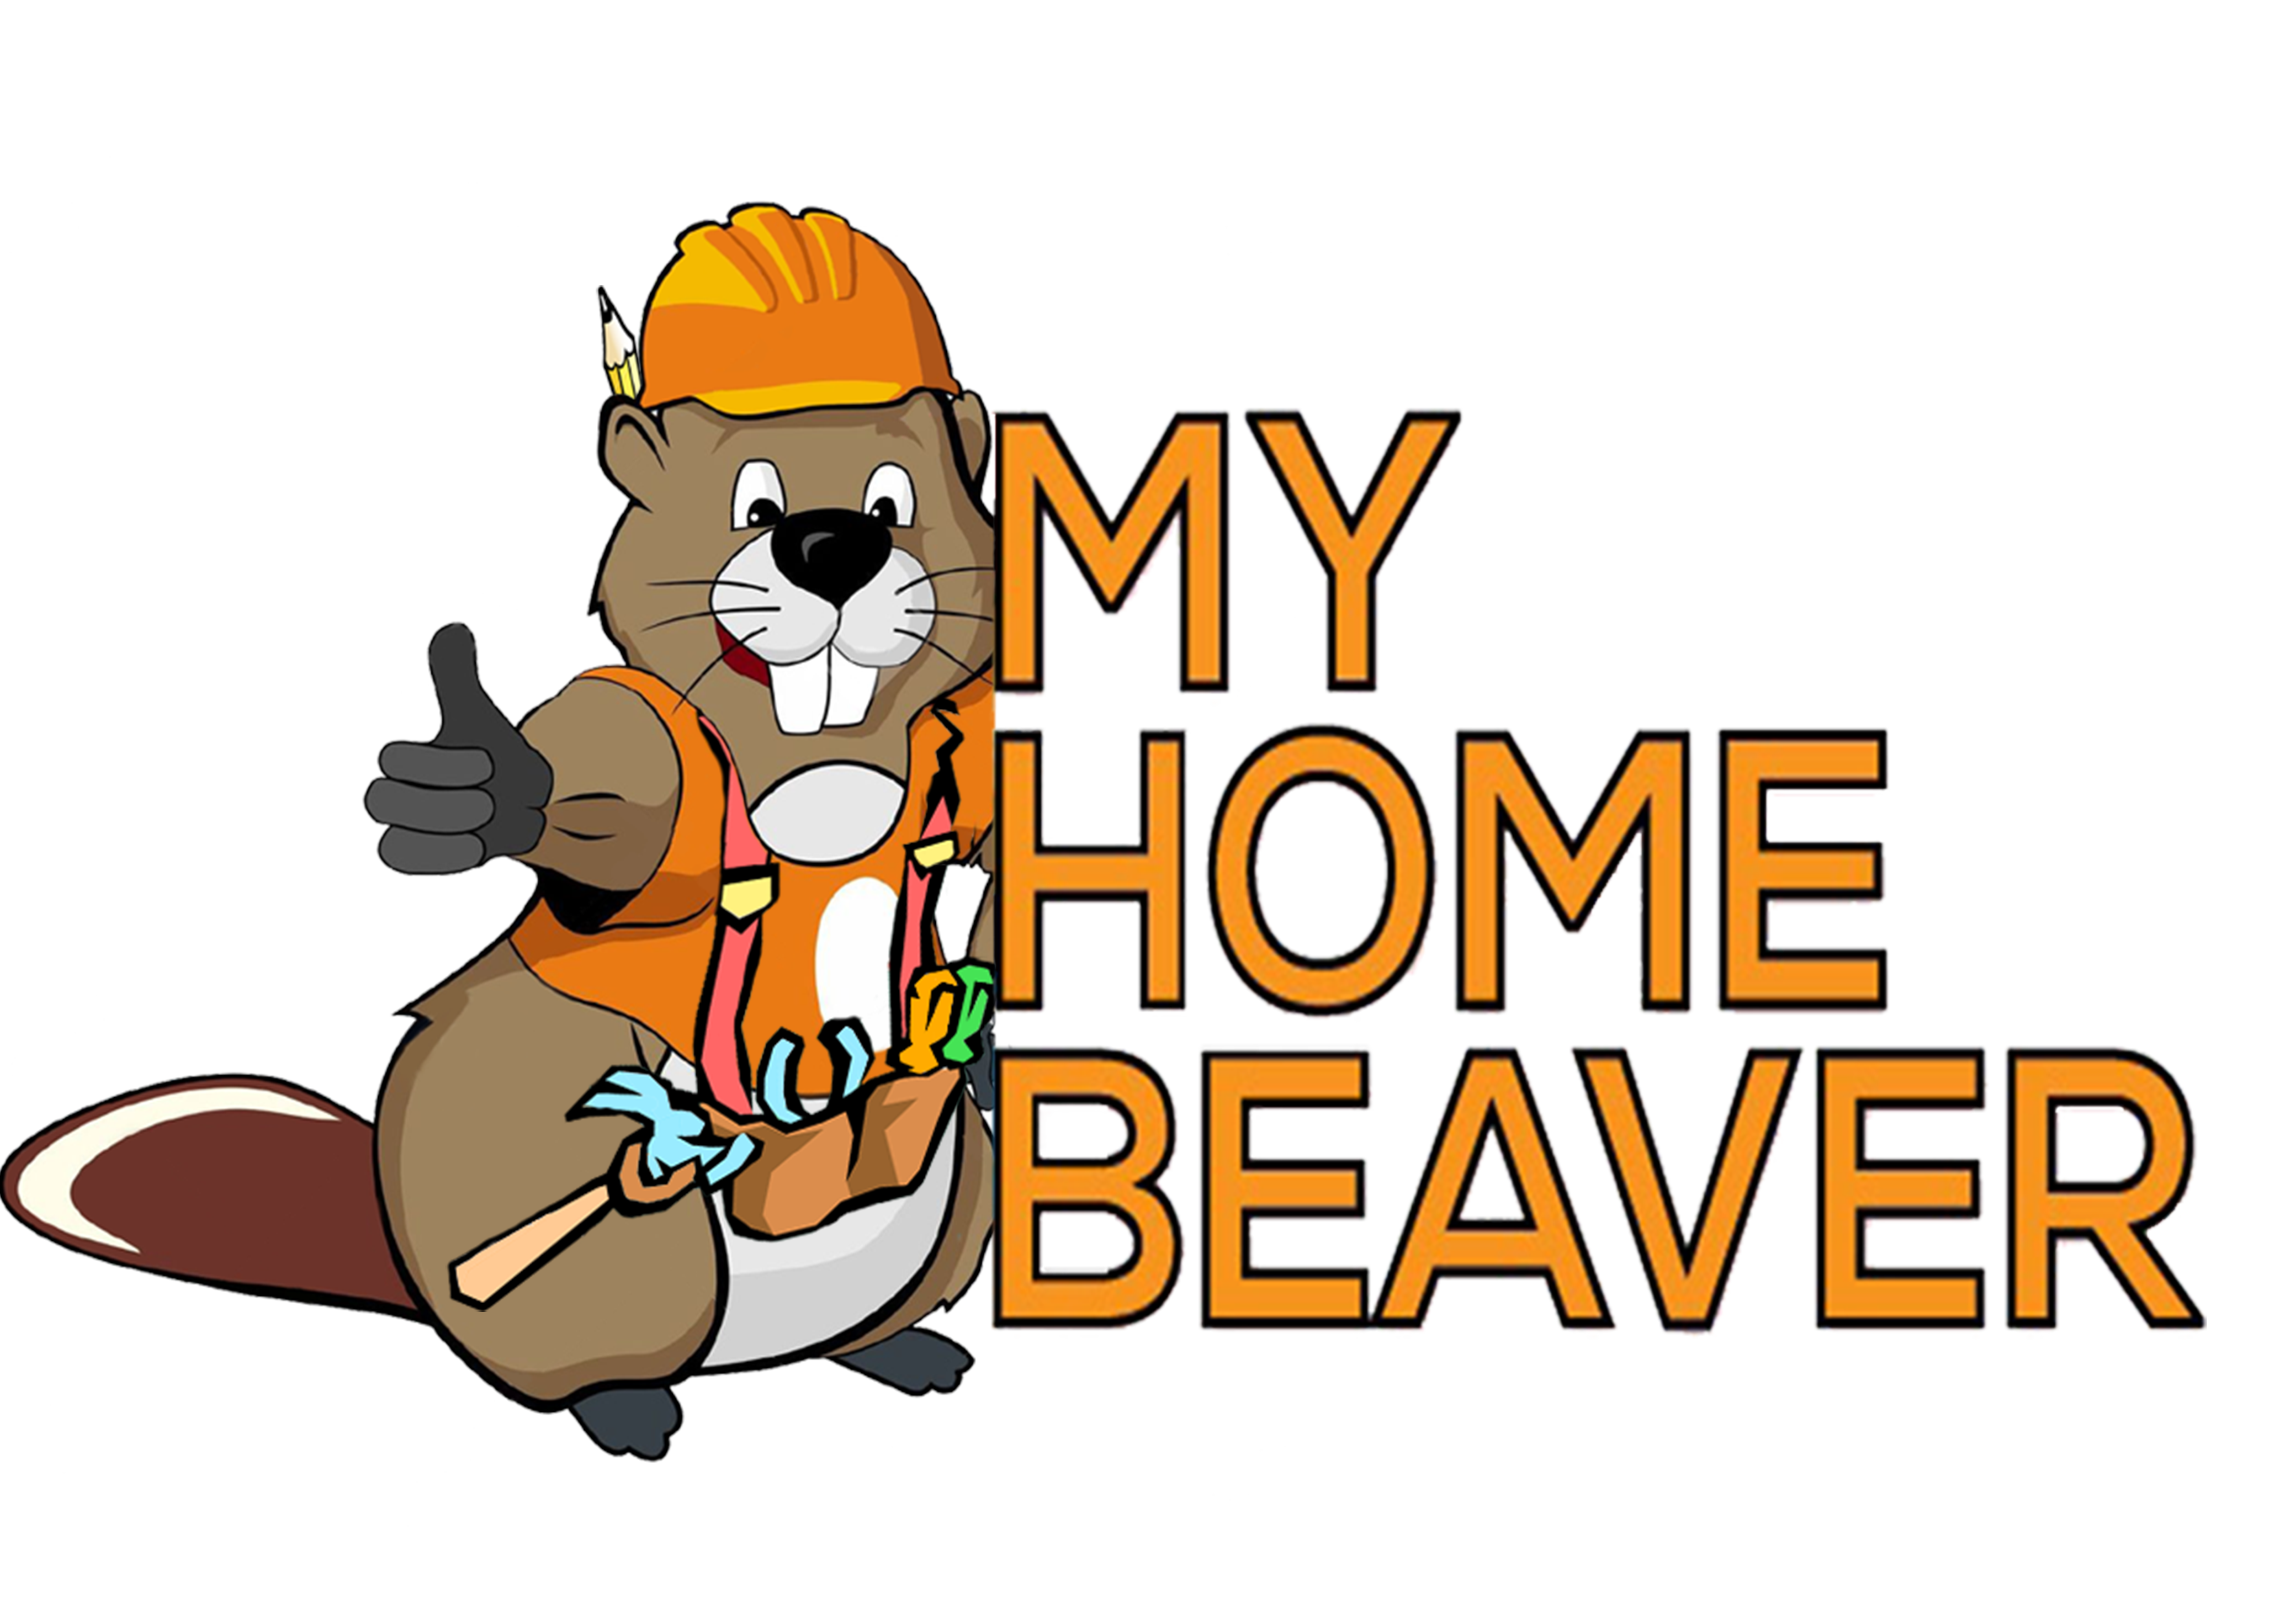 Singapore Online Home DIY Hardware Tools Shop | My Home Beaver